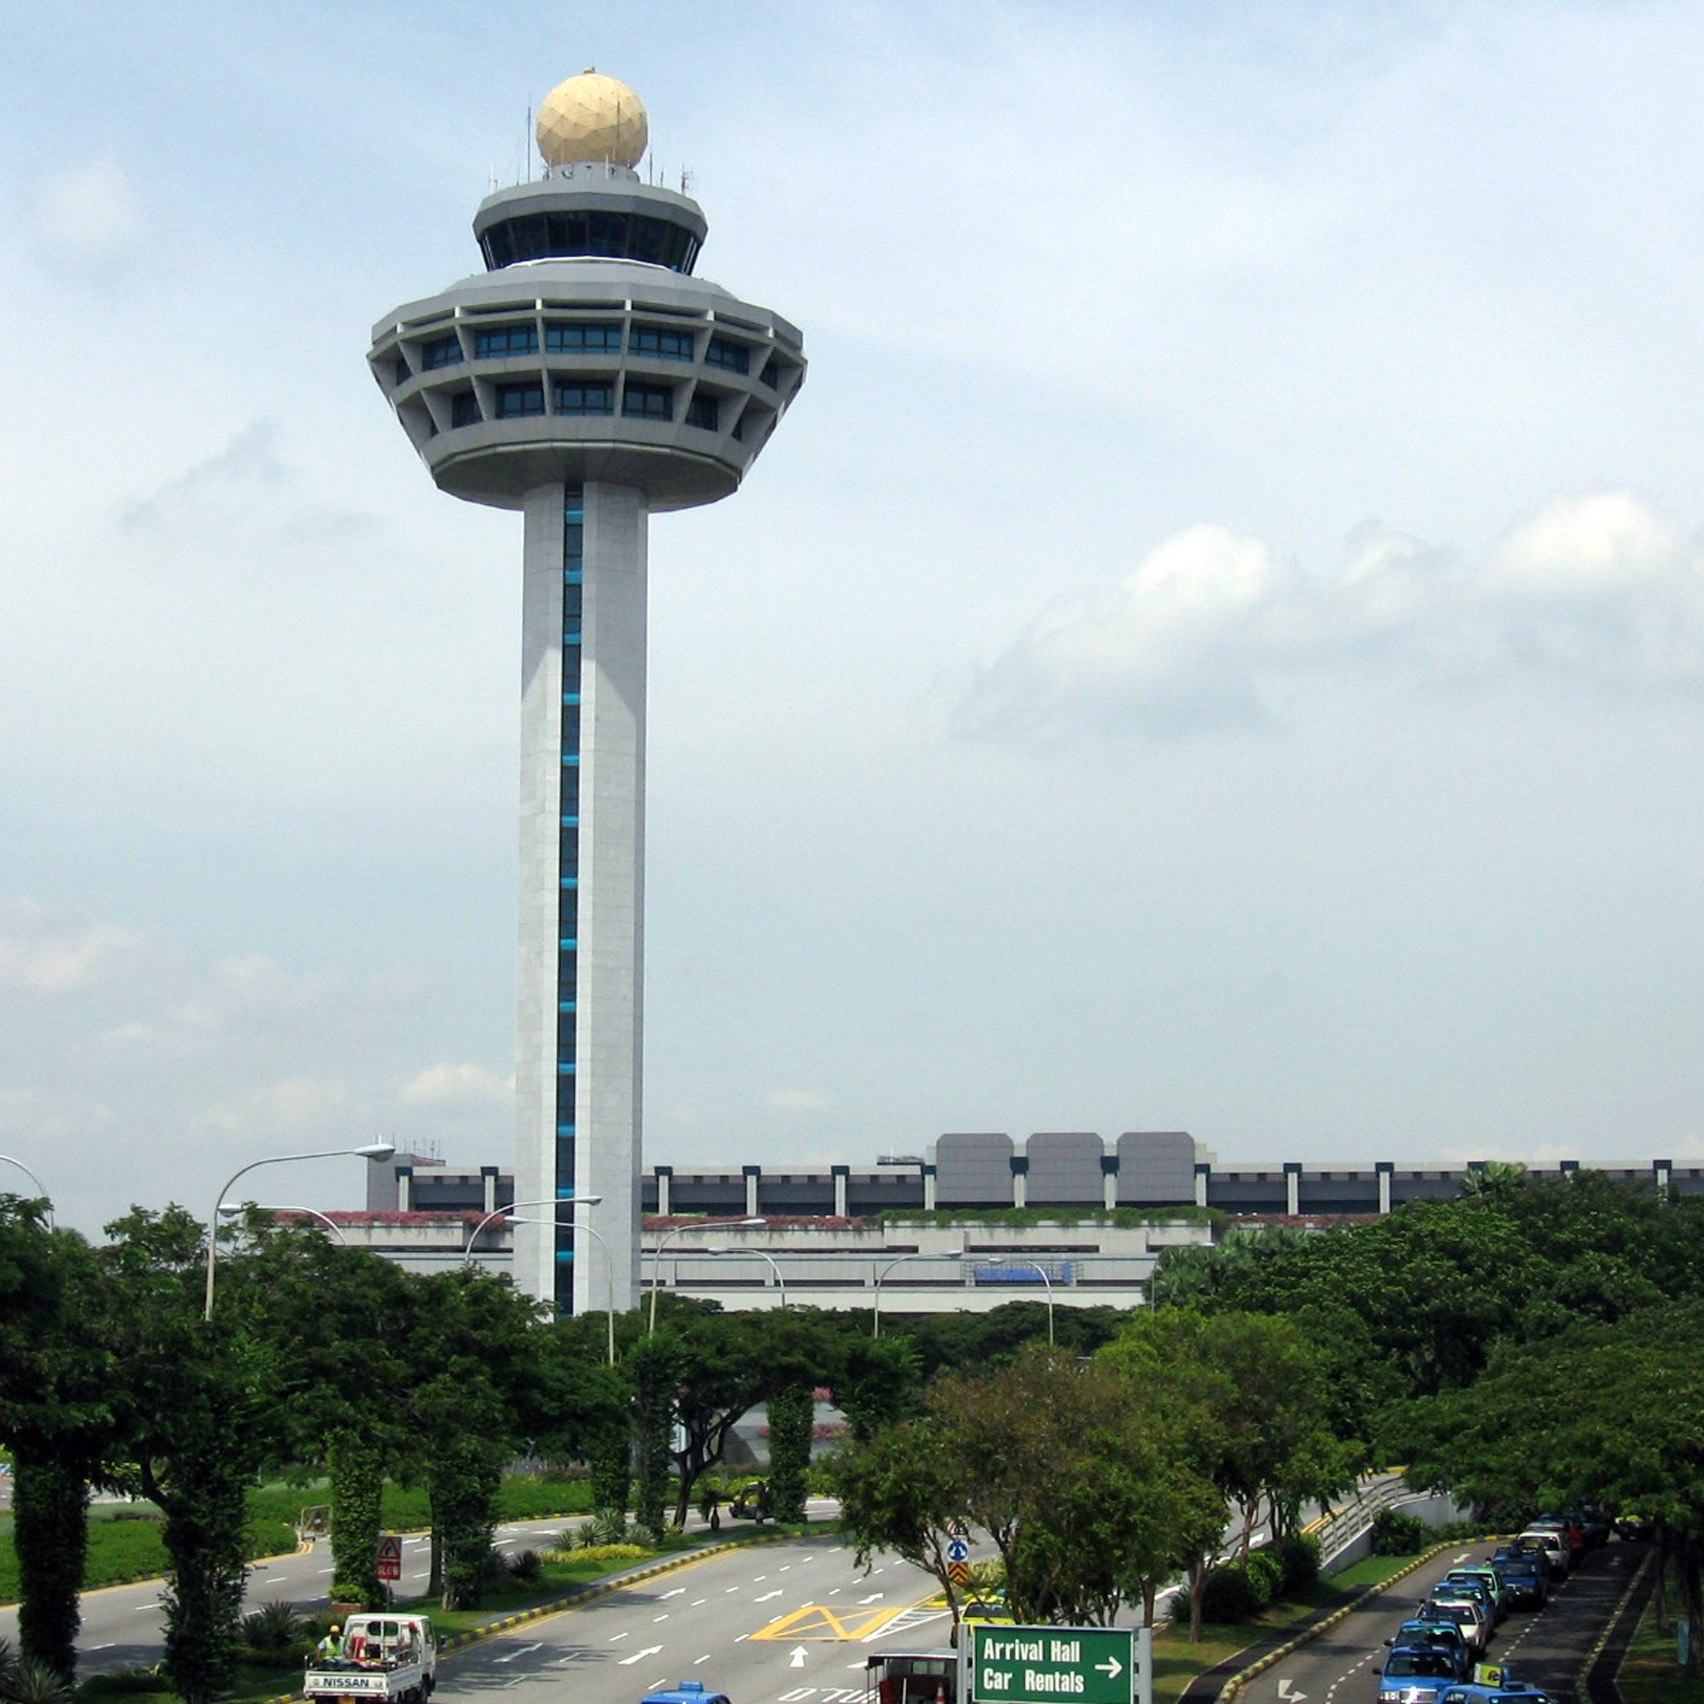 Terminal 5, Changi International Airport, Singapore